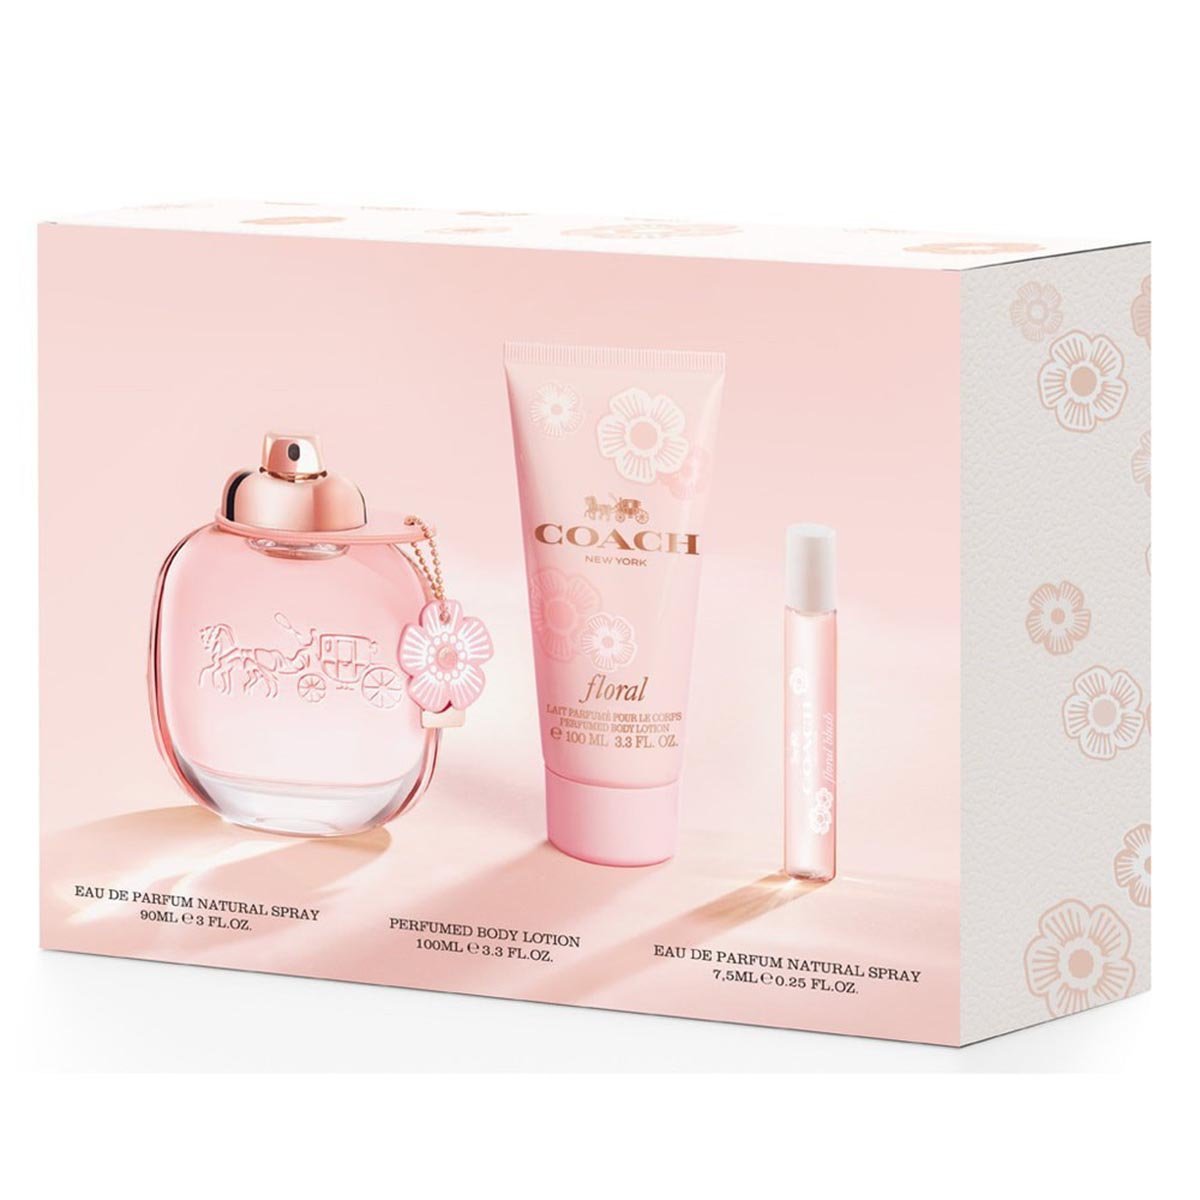 Coach New York Floral Gift Set - My Perfume Shop Australia